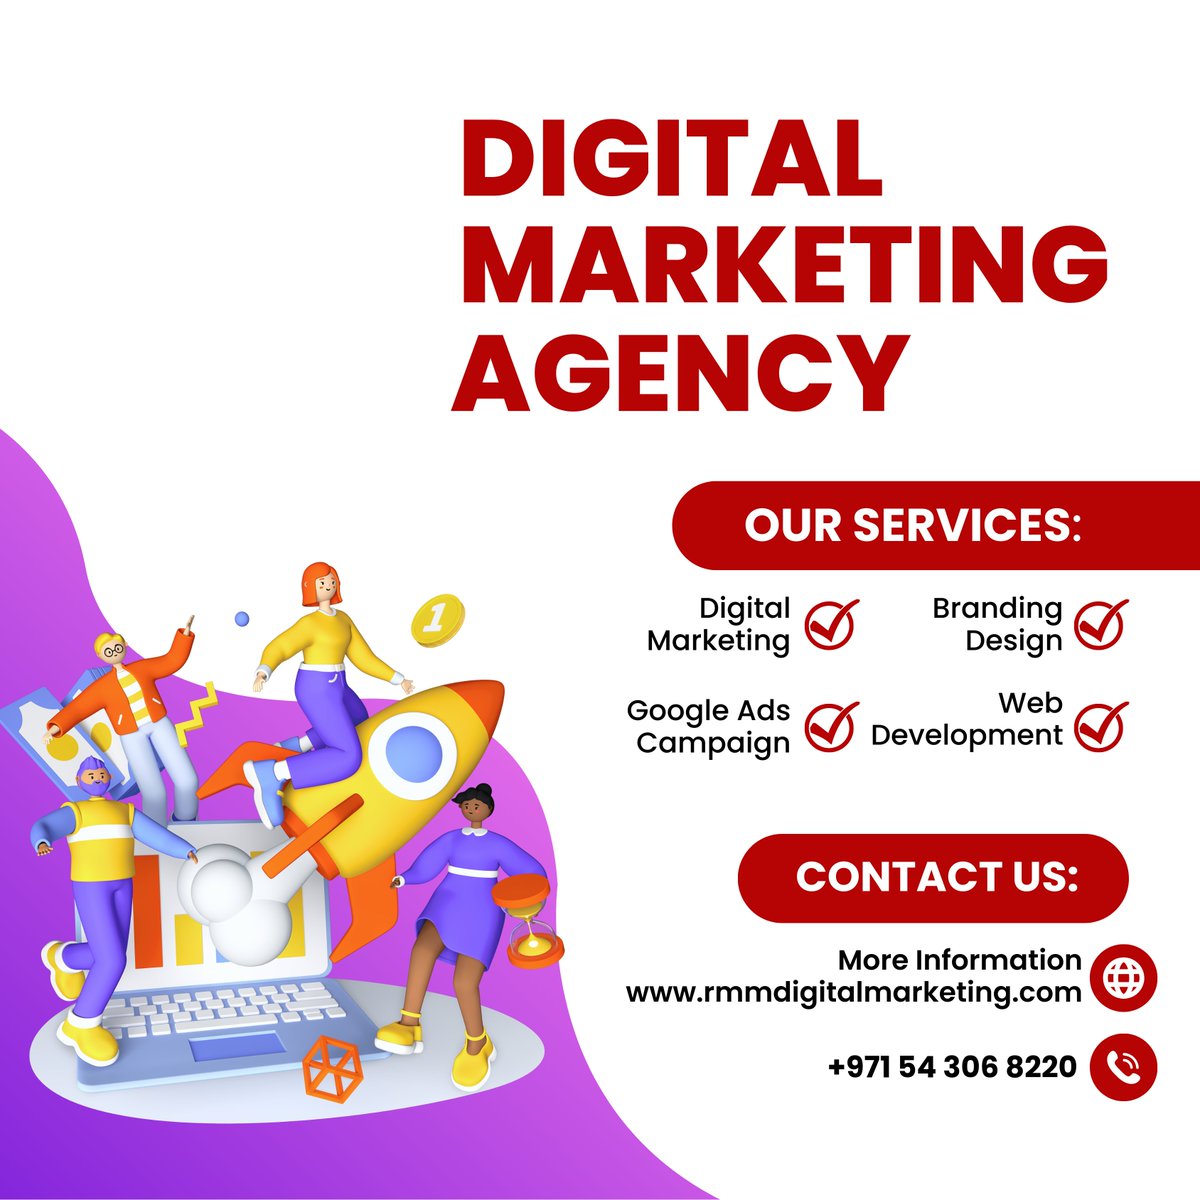 '🚀 Taking your brand to the next level through digital marketing excellence. Let's soar together!📈 #DigitalMarketingMasters'
#DubaiDigitalMarketing #DigitalDubai #MarketingMagicDXB #DubaiBusinessBoost #CityOfGoldMarketing #DXBOnlinePromotion
#UAEOnlineAdvertising #DubaiBranding